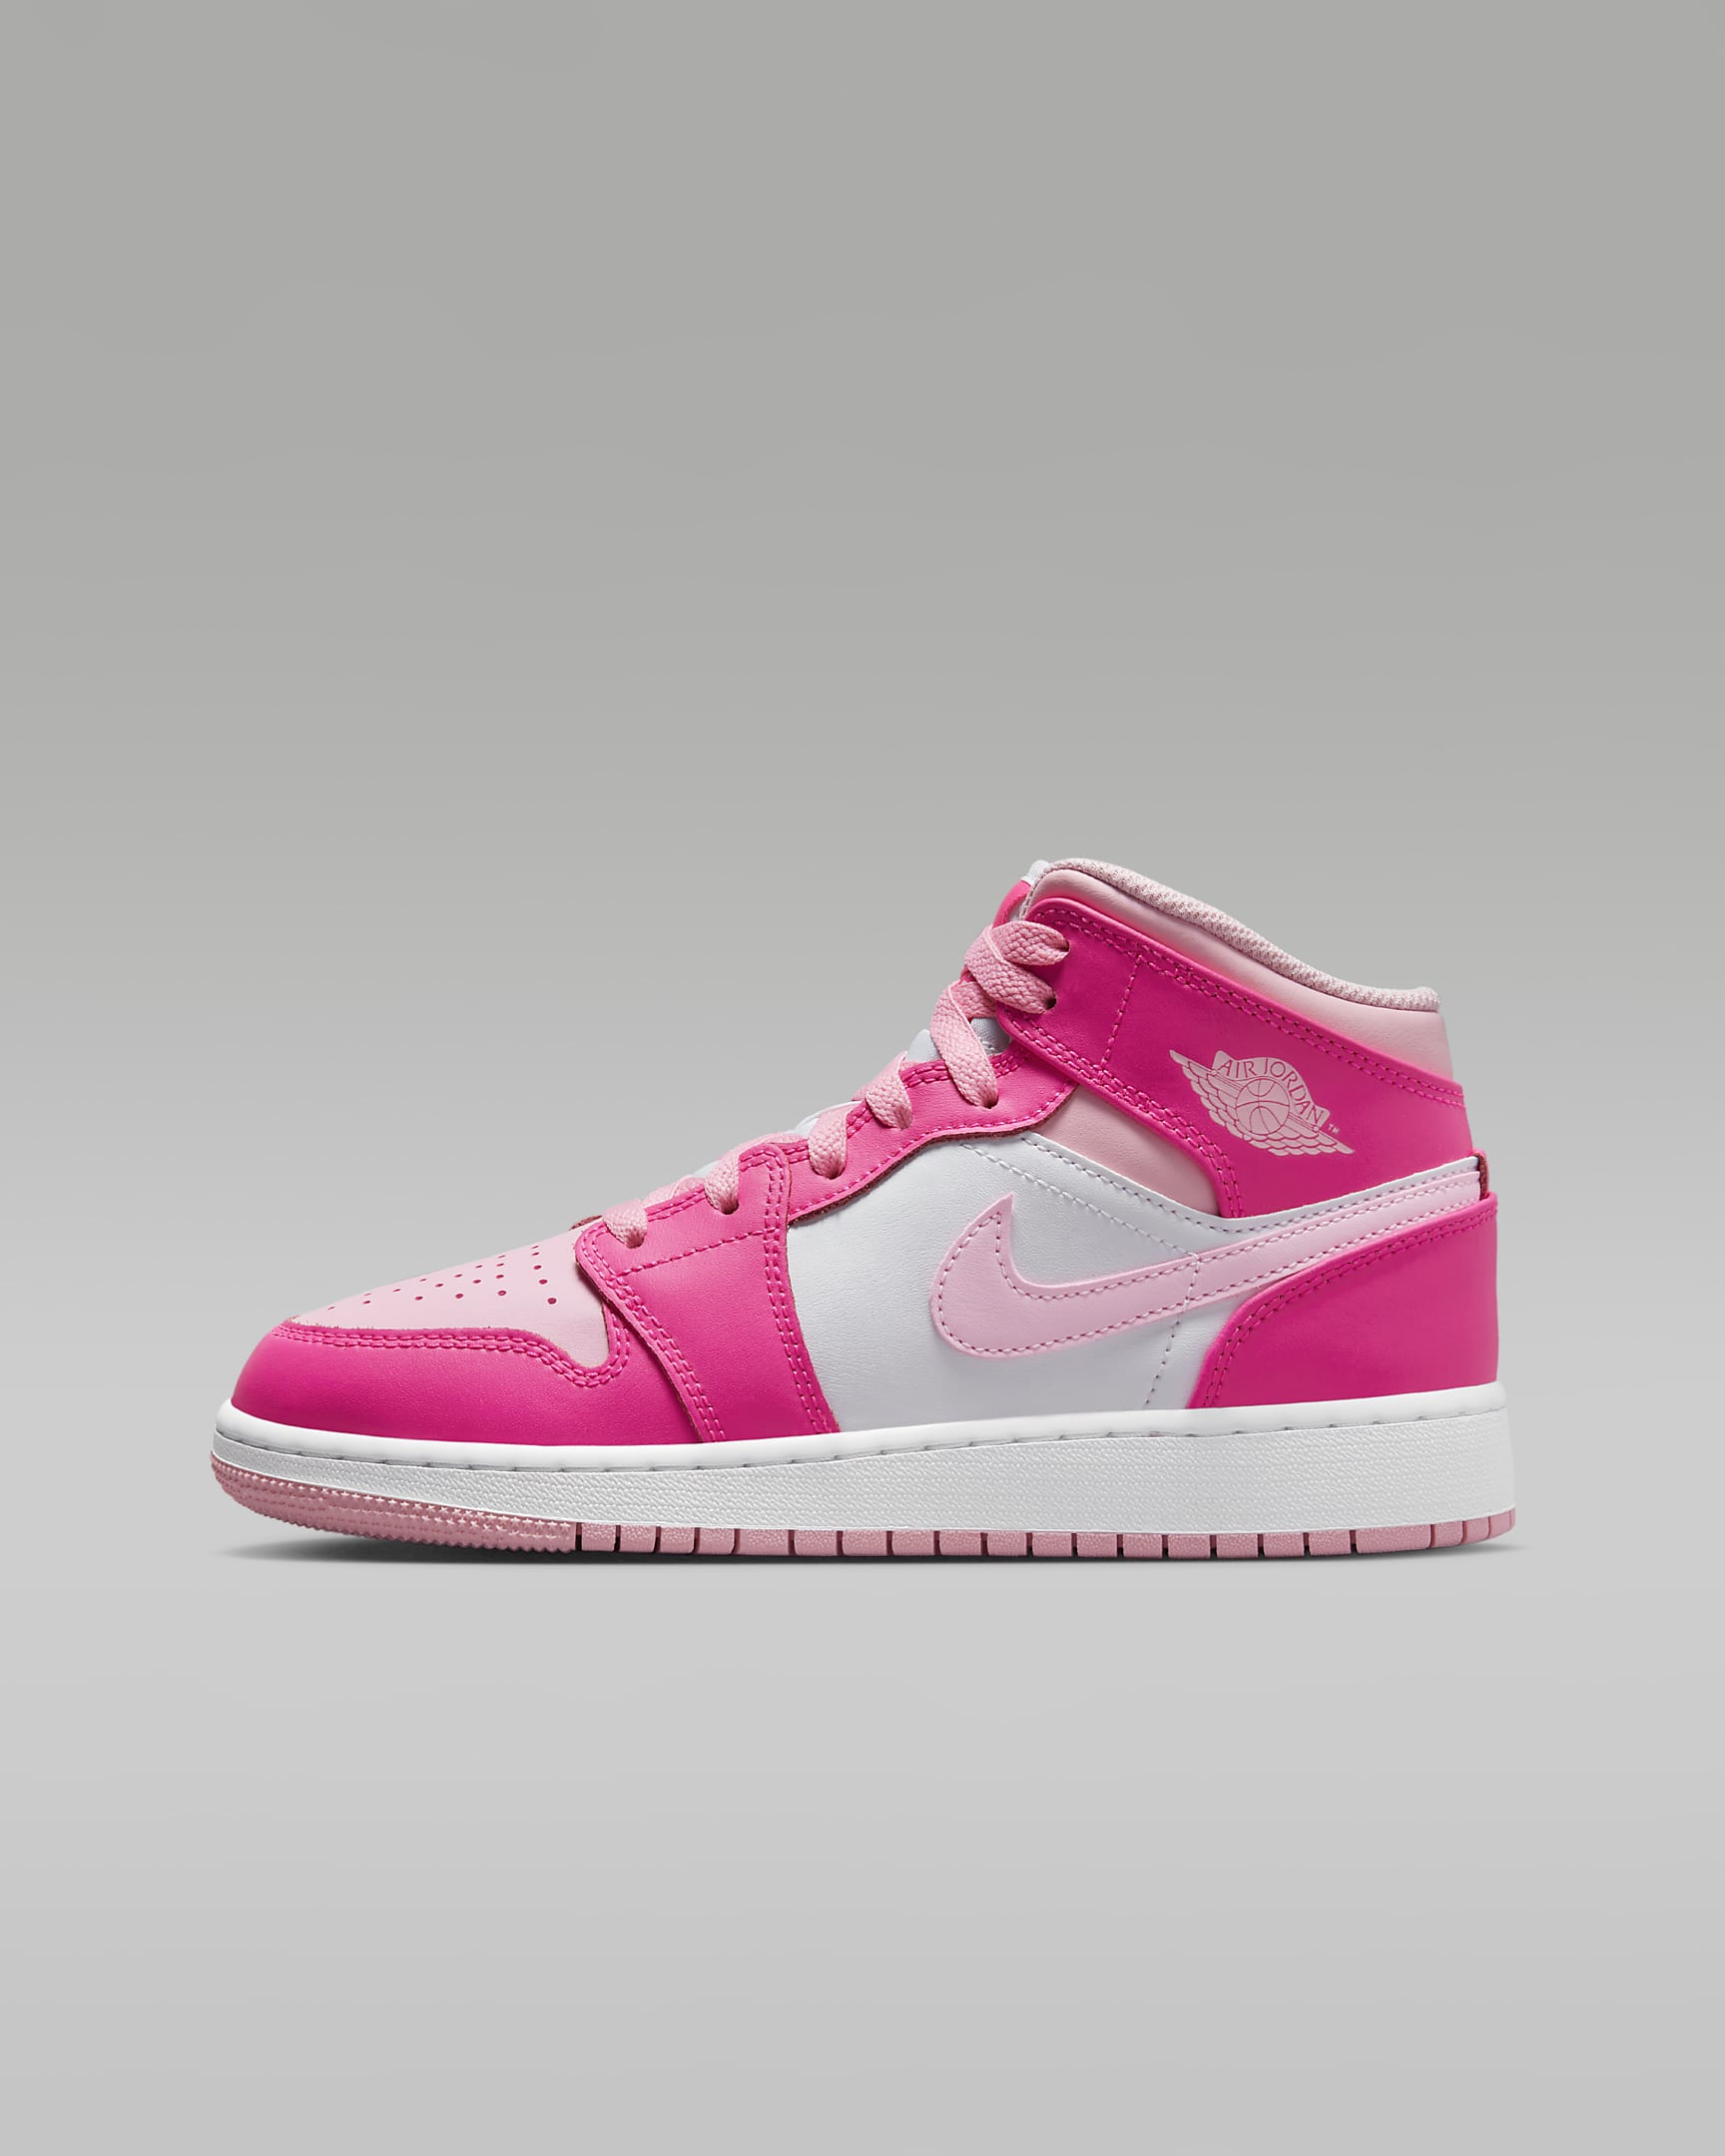 Air Jordan 1 Mid Schuh für ältere Kinder - Weiß/Fierce Pink/Medium Soft Pink